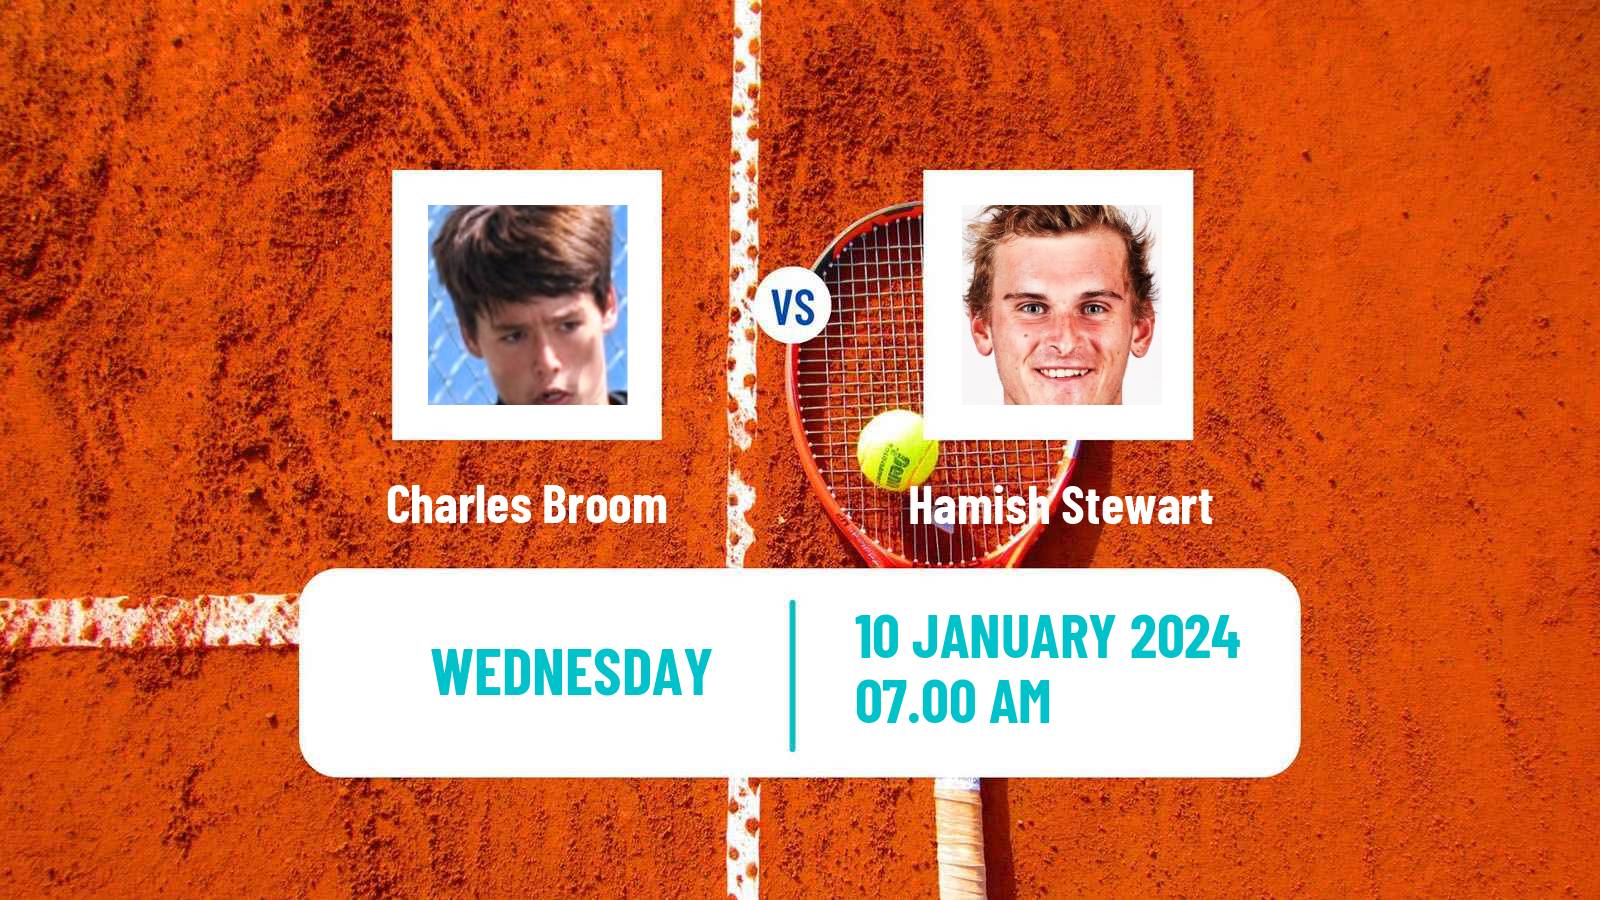 Tennis ITF M25 Loughborough Men Charles Broom - Hamish Stewart